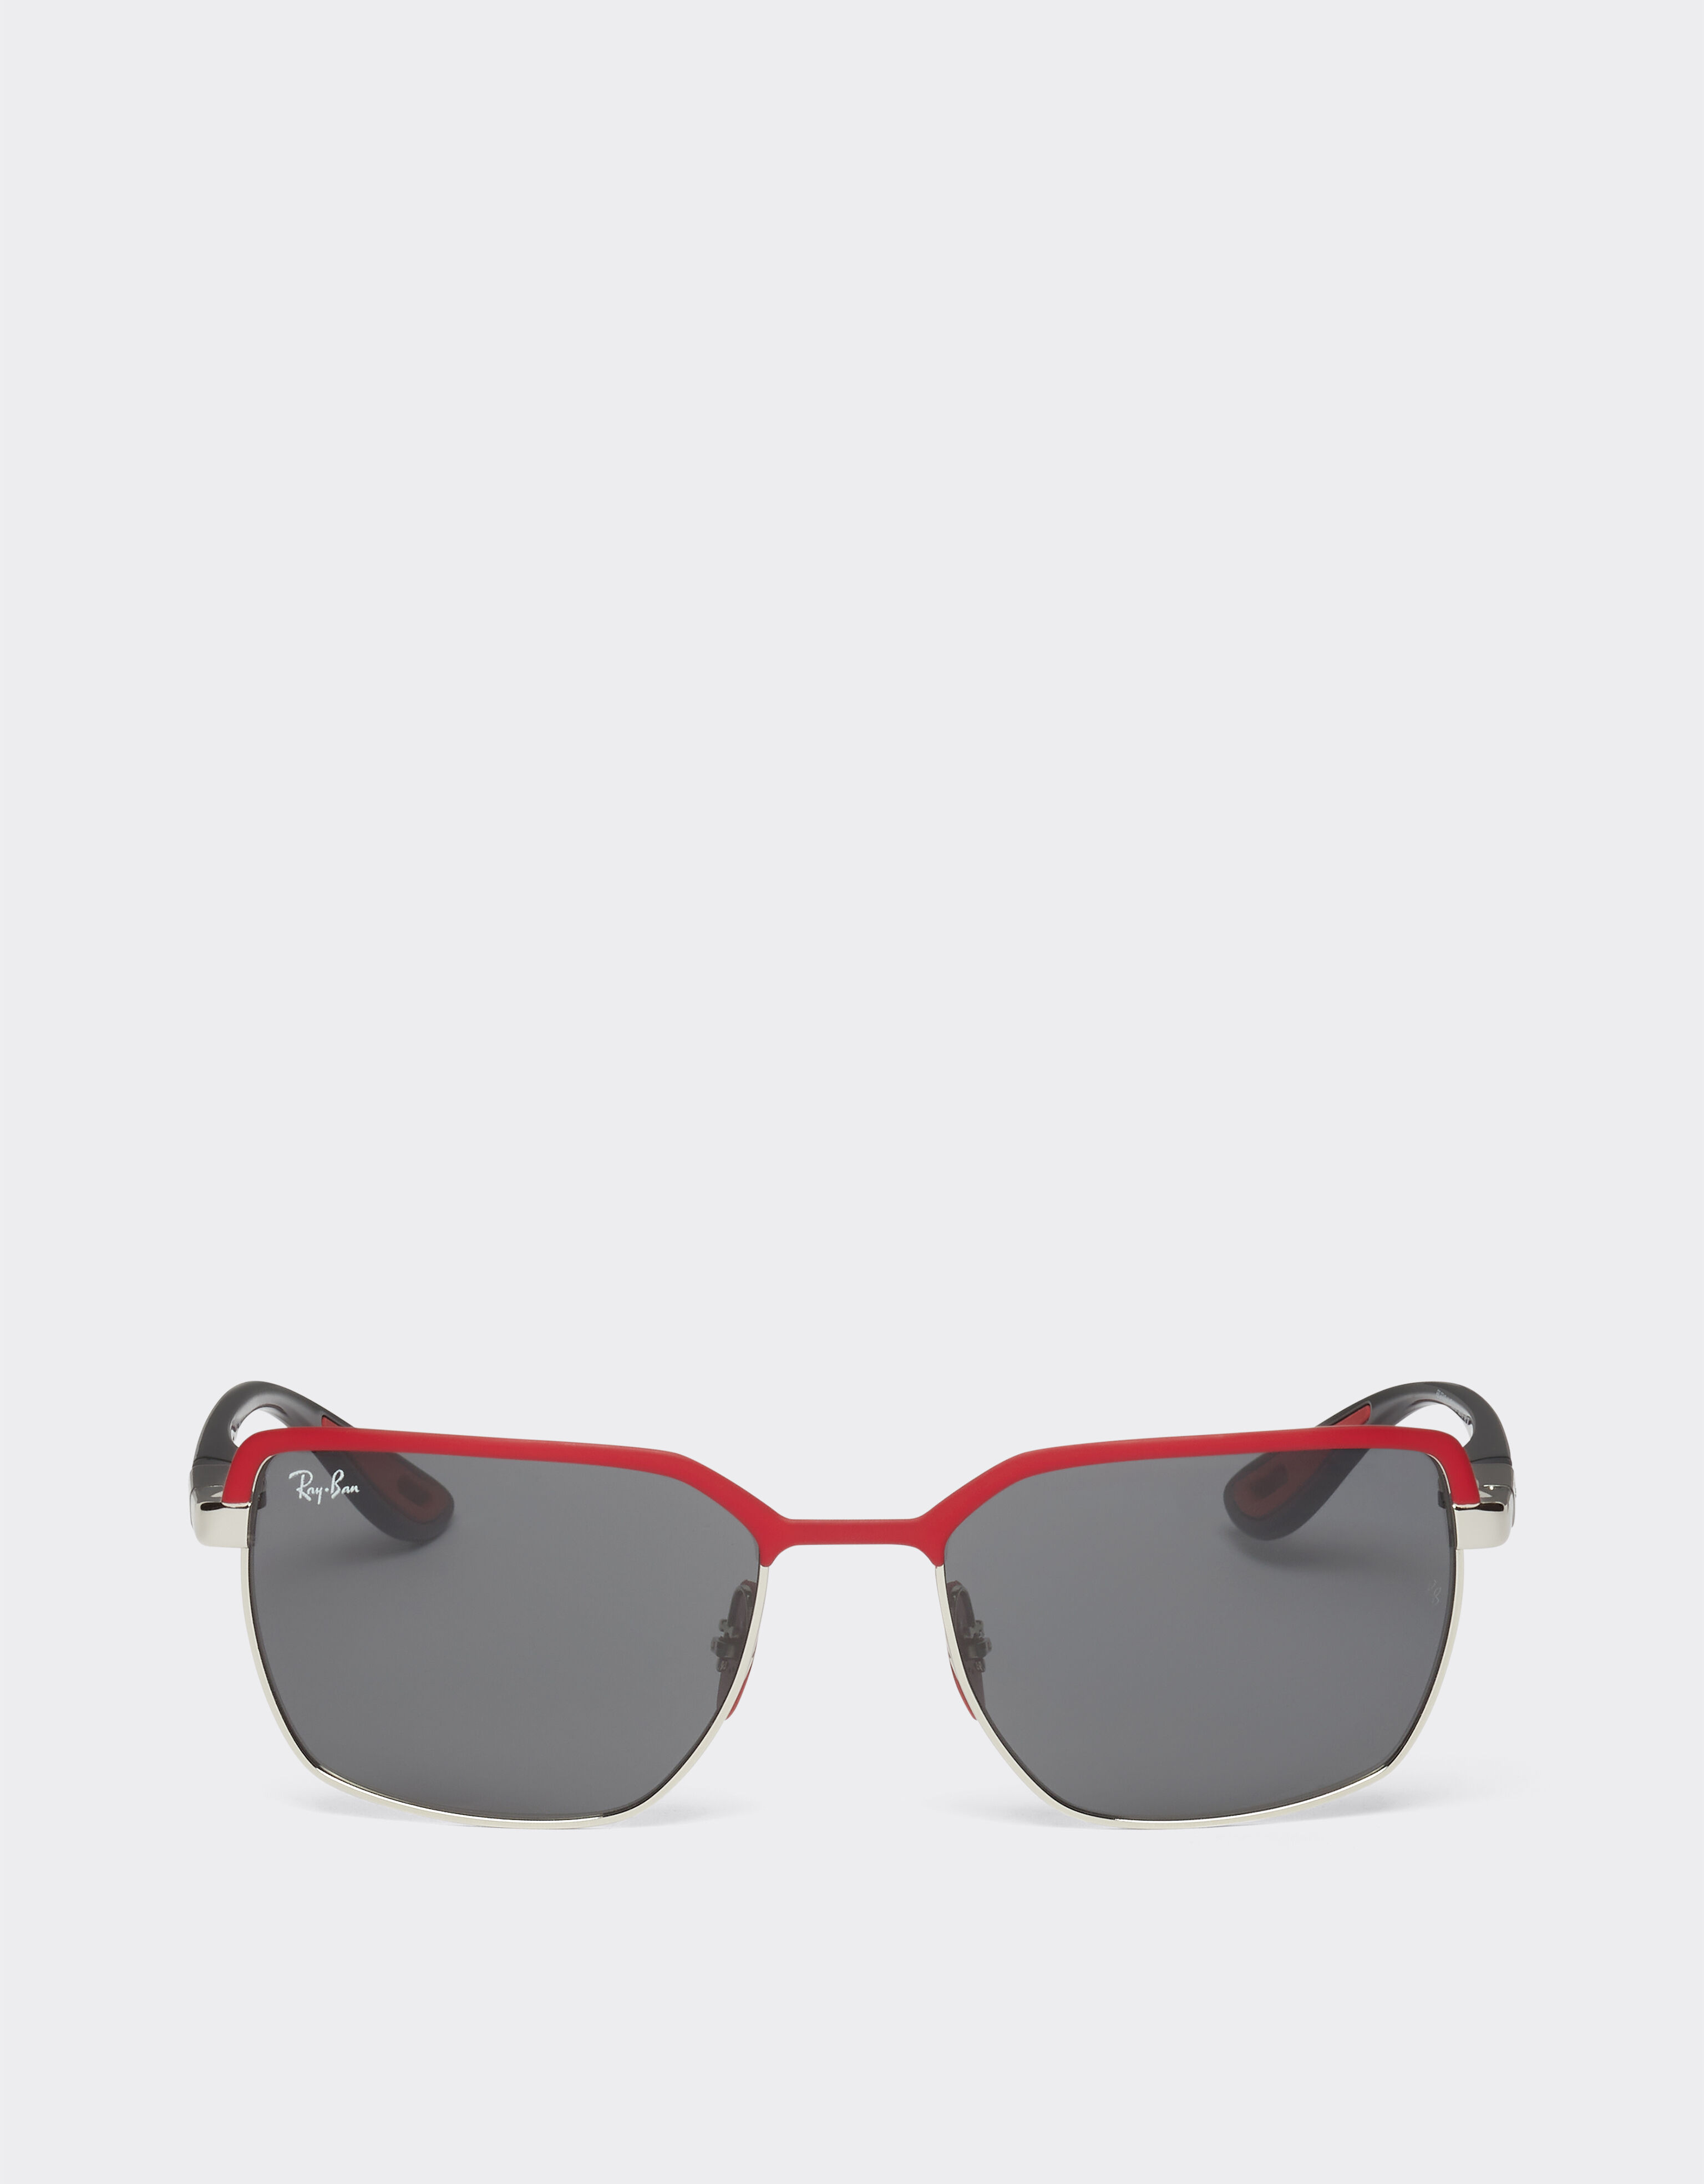 Ferrari Ray-Ban for Scuderia Ferrari 0RB3743M matt red and gunmetal grey metal sunglasses with grey lenses Optical White F1258f